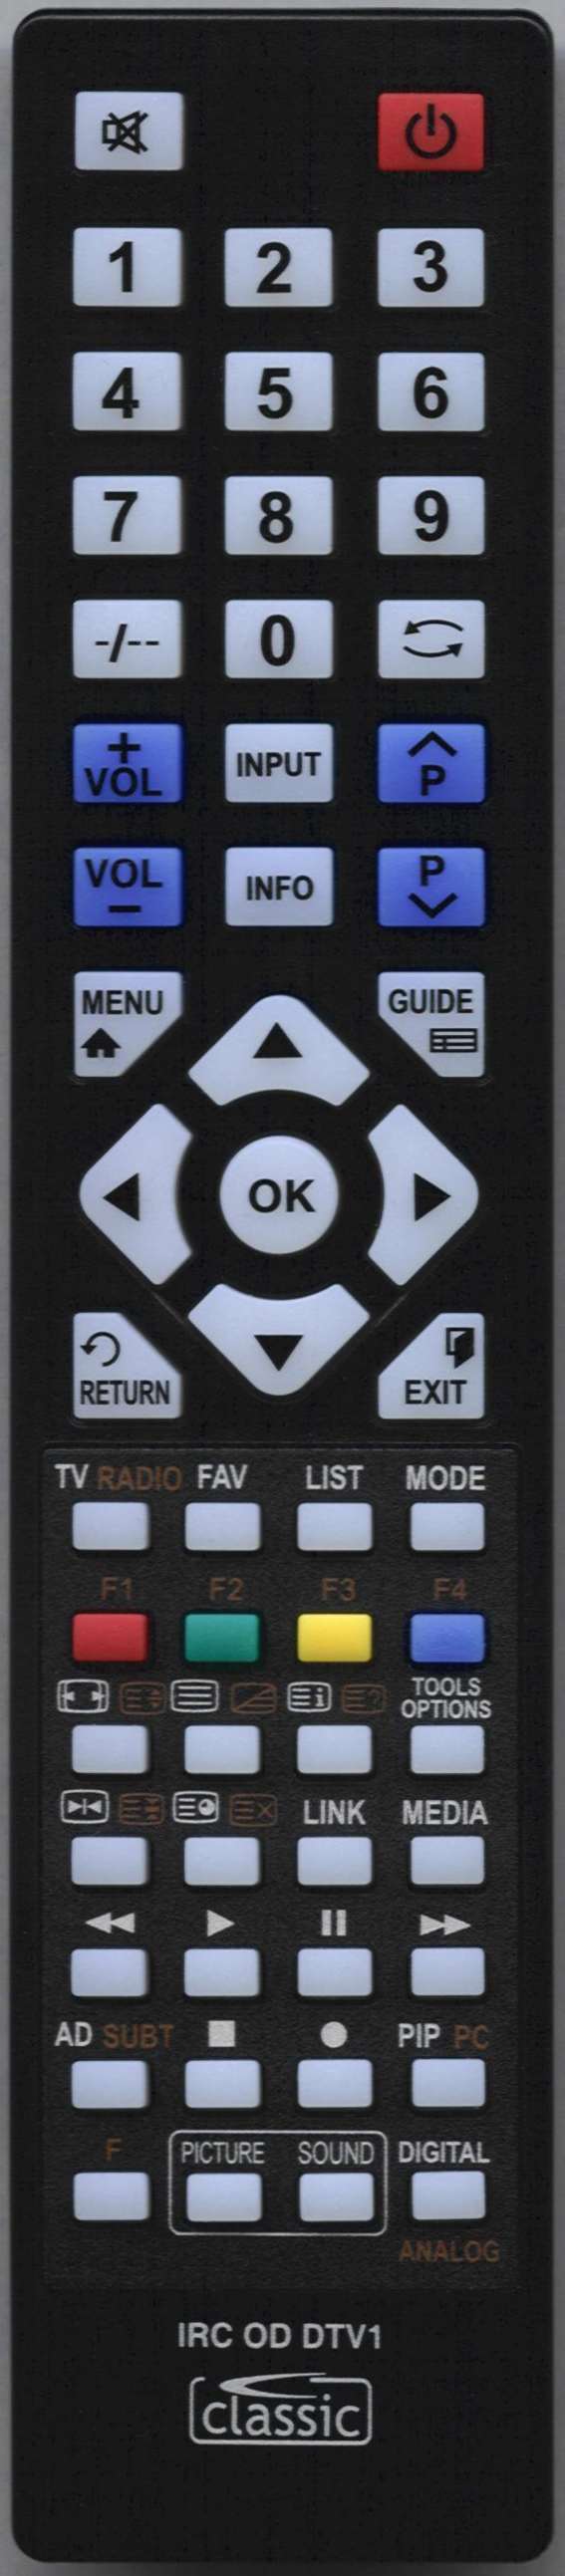 SONY KDL40Z4500 Remote Control Alternative